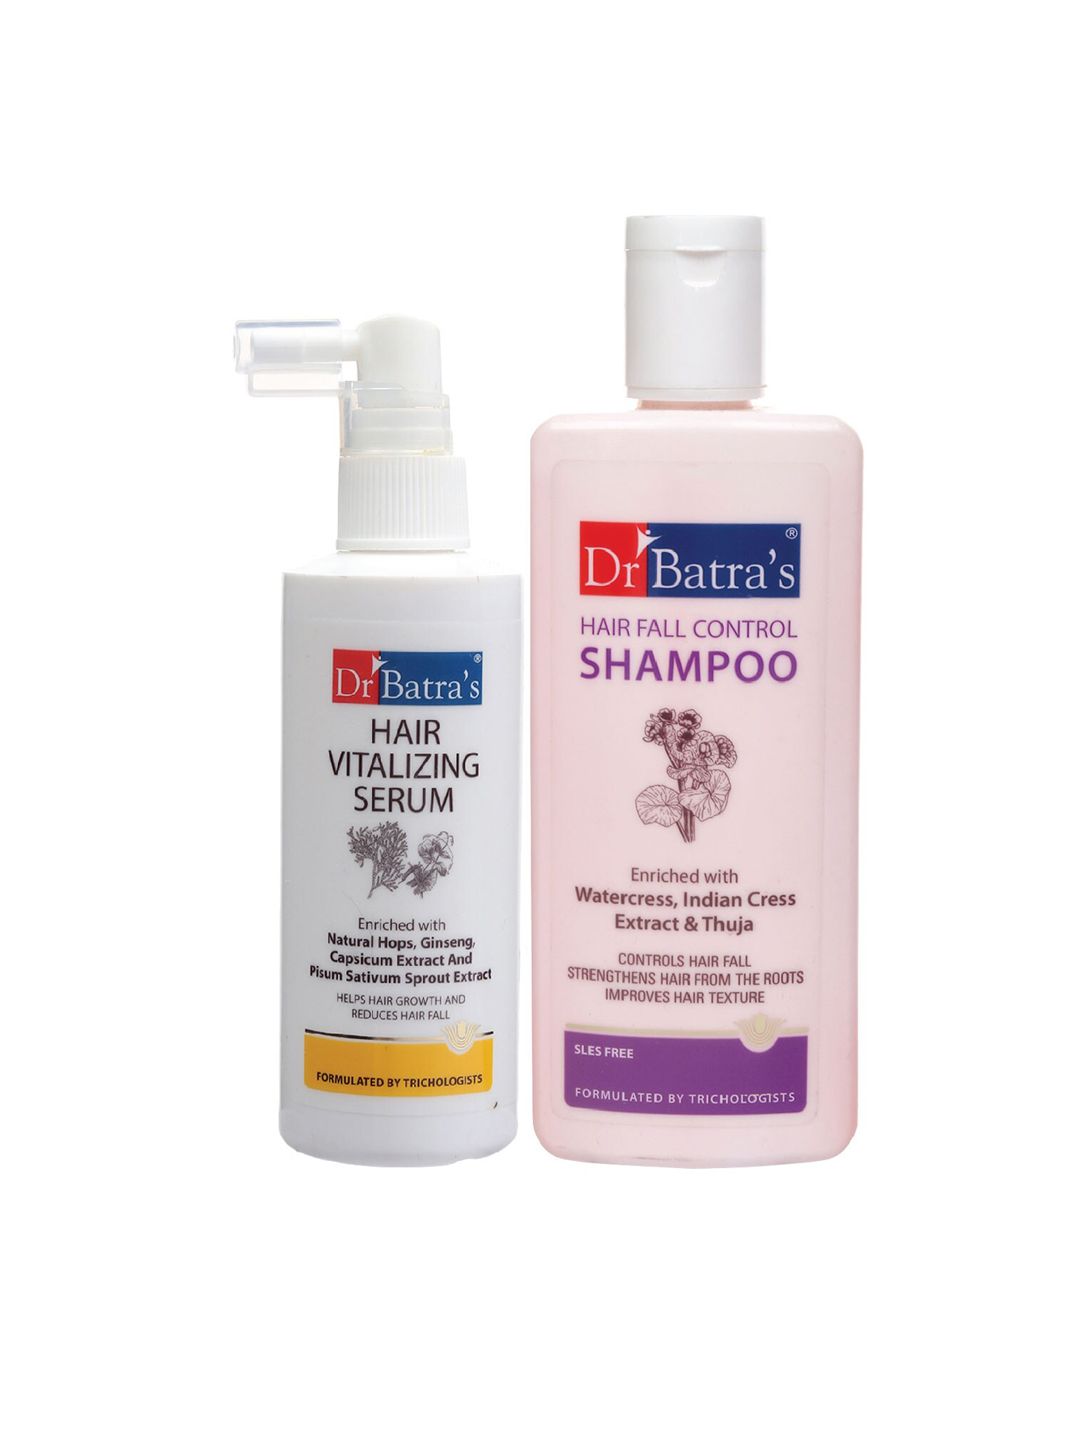 Dr Batra's Hair Vitalizing Serum & Hairfall Control Shampoo Price in India